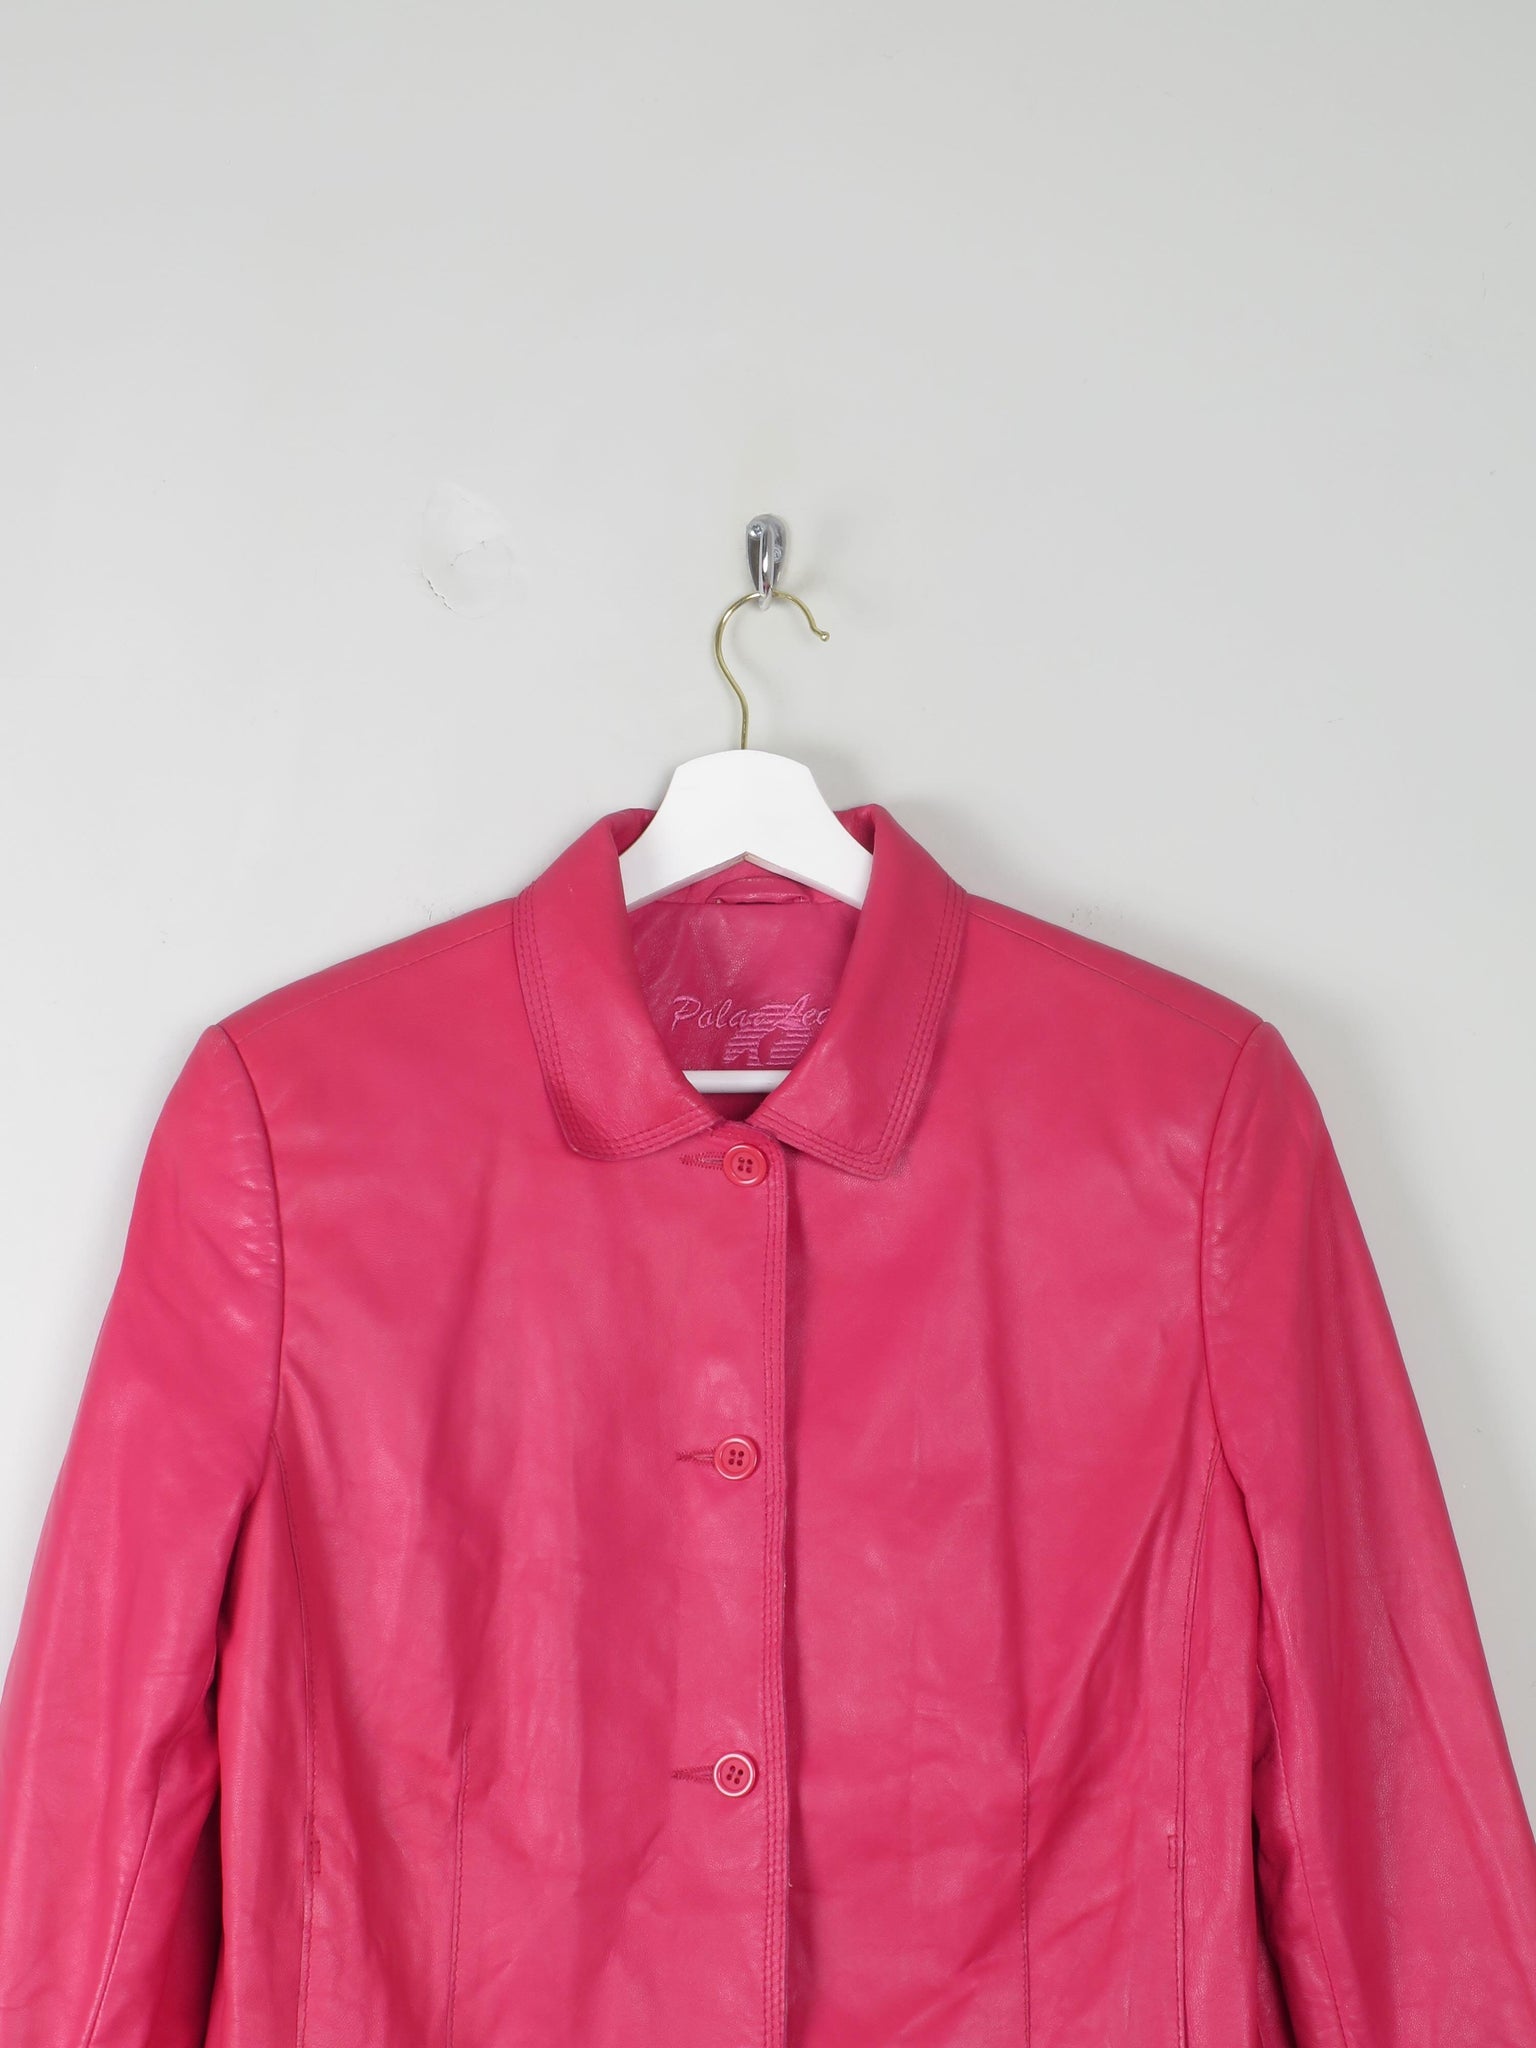 Women's Vintage Pink Leather Jacket S/M - The Harlequin